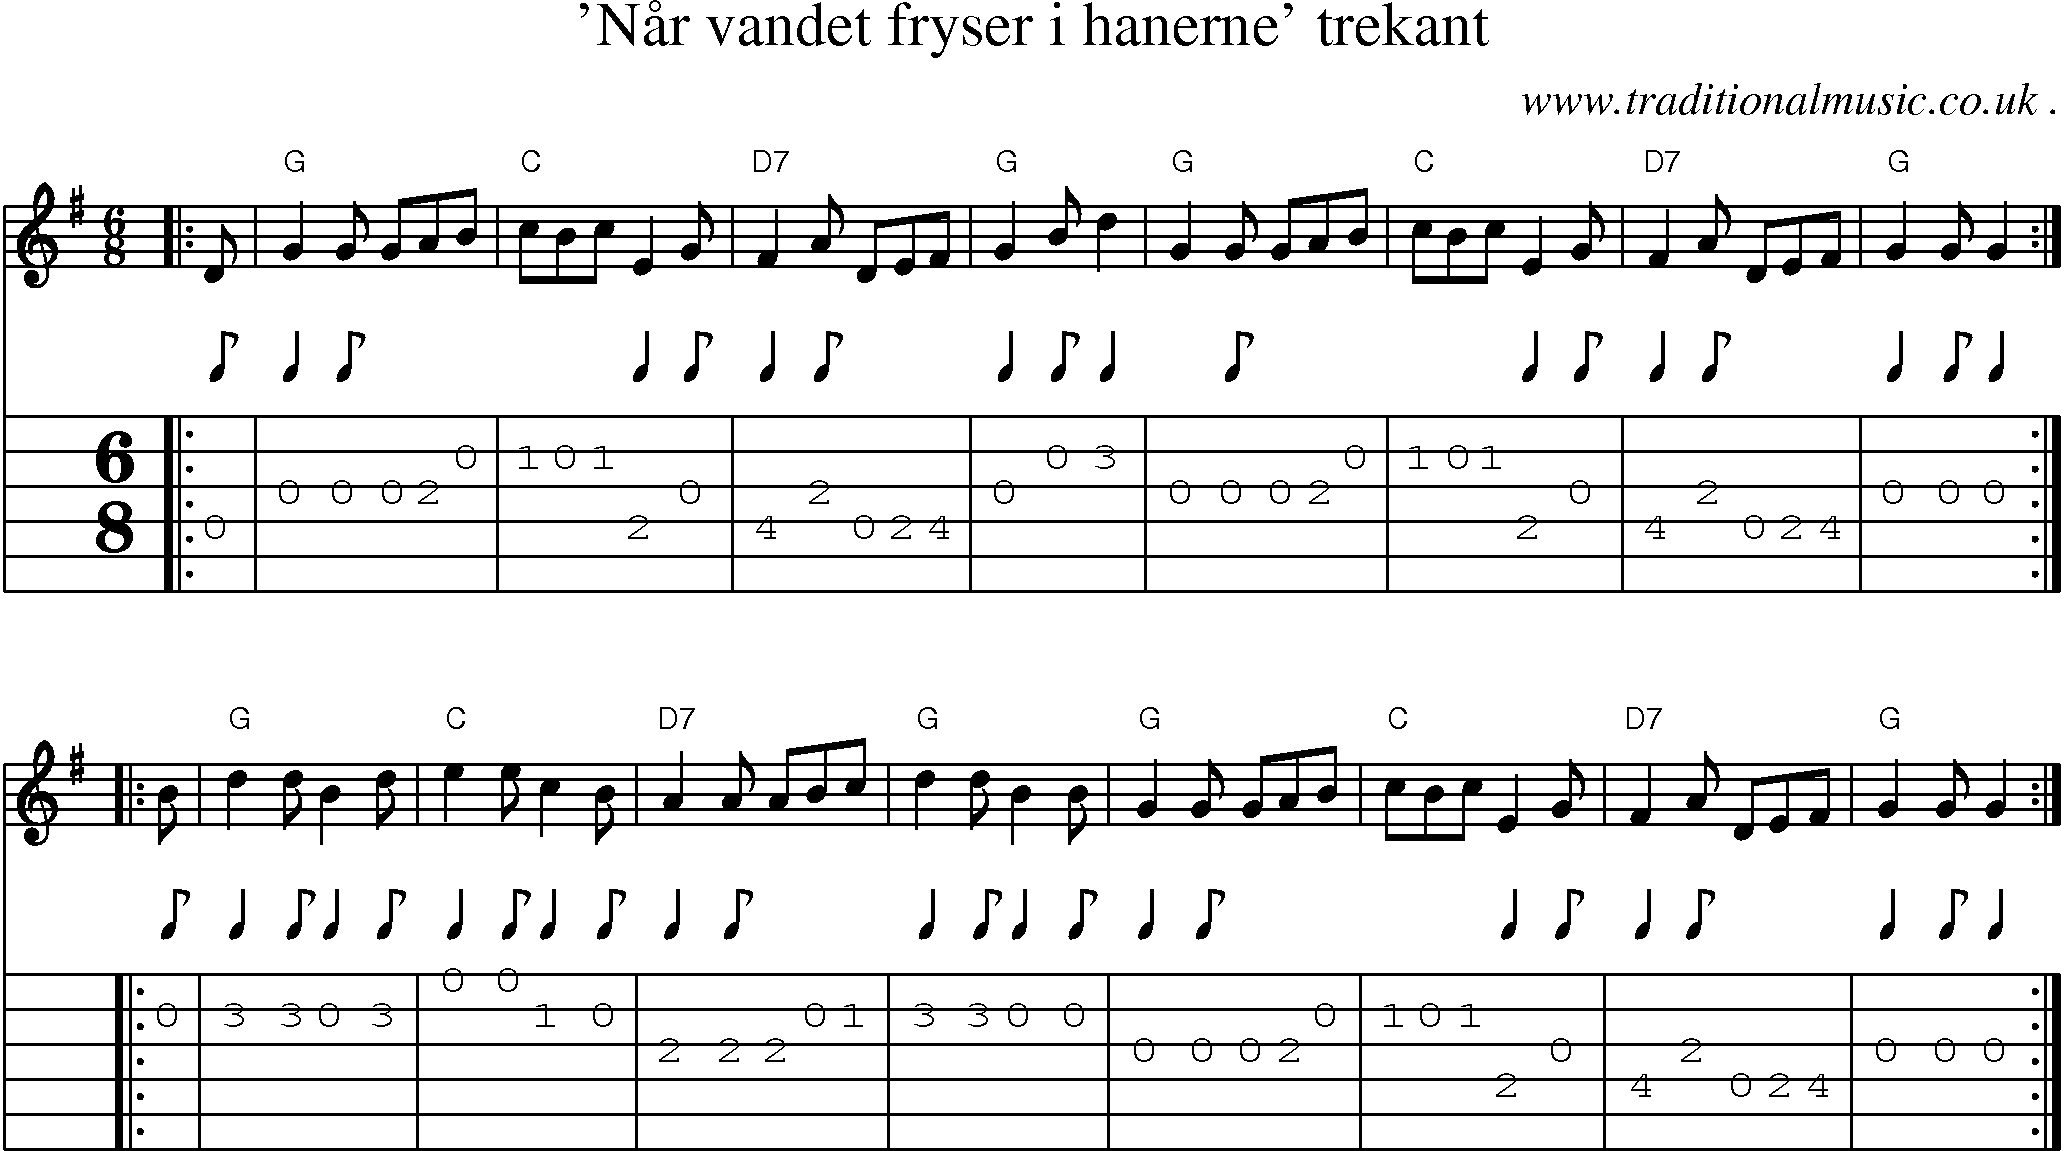 Sheet-music  score, Chords and Guitar Tabs for Naar Vandet Fryser I Hanerne Trekant